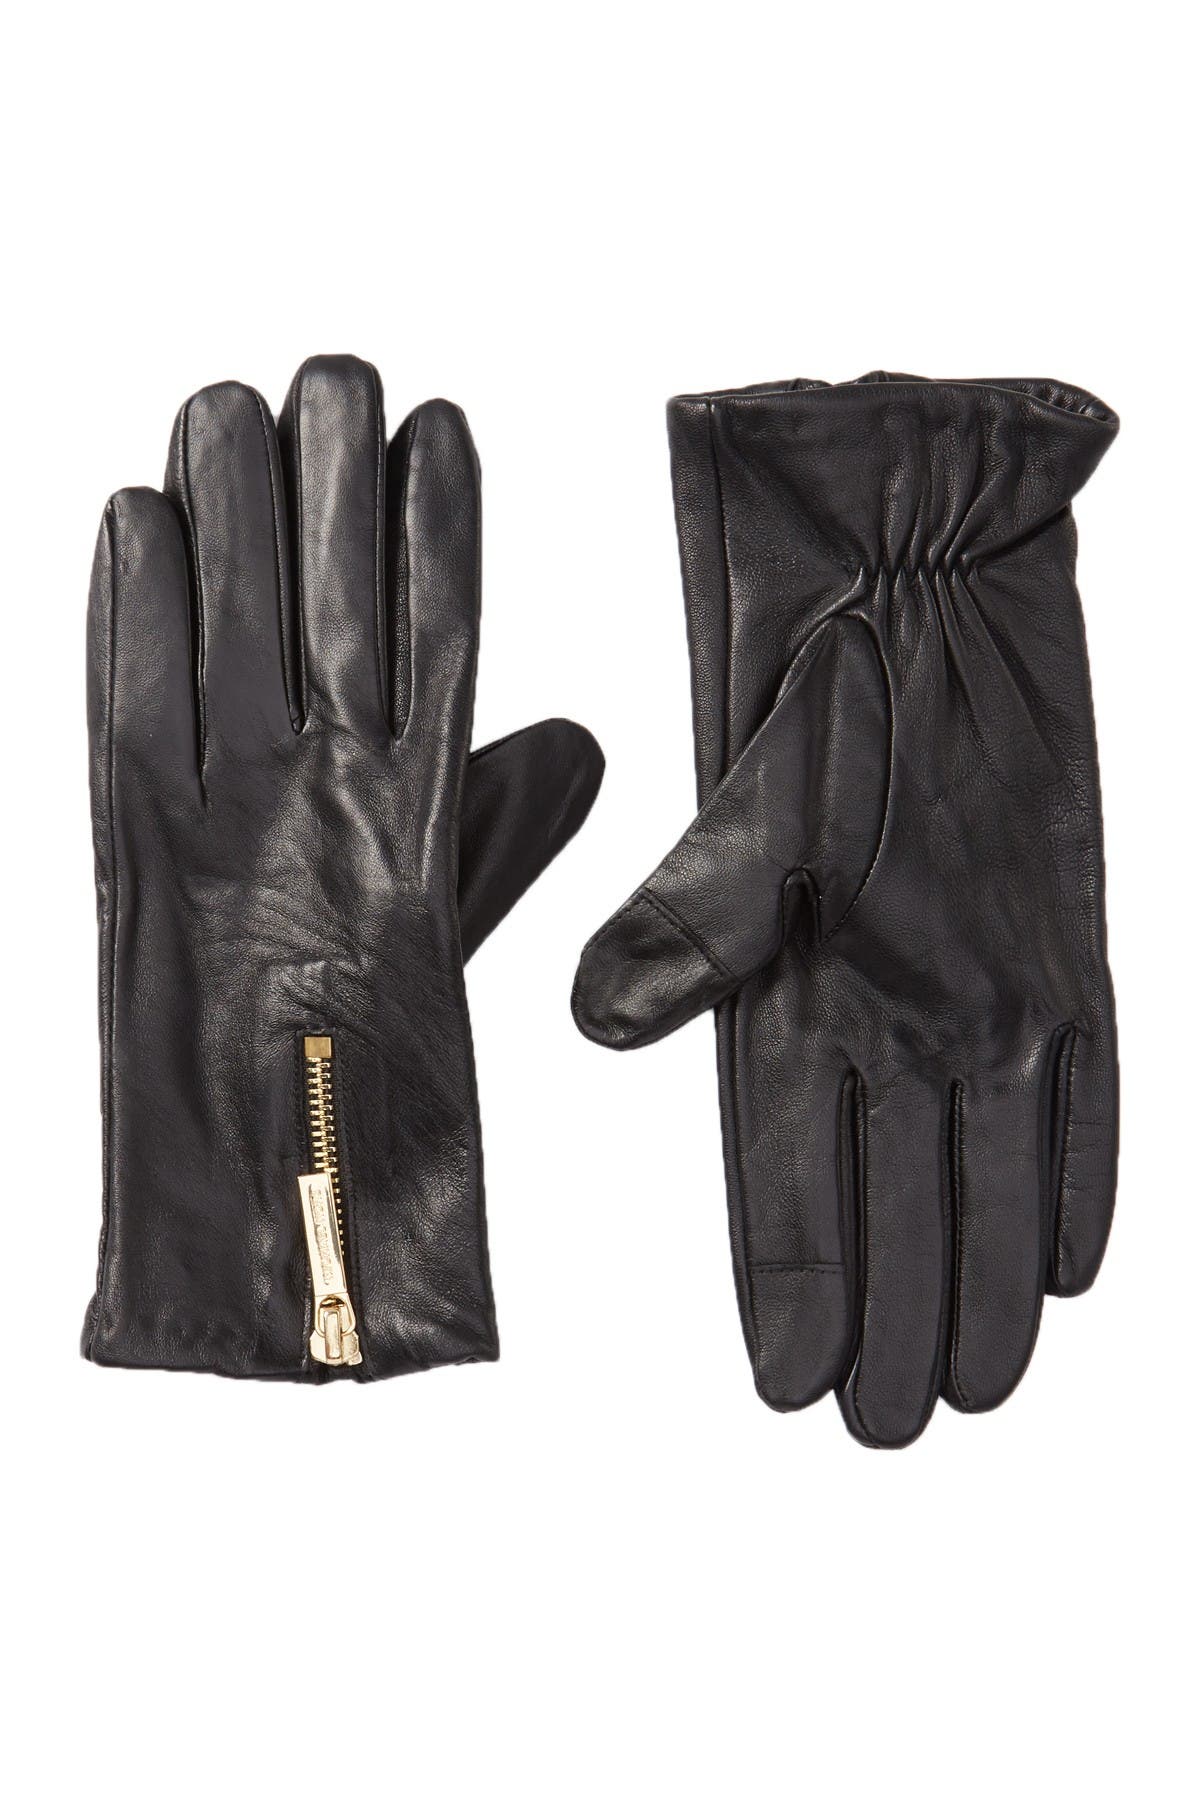 Michael Kors | Leather Gloves 